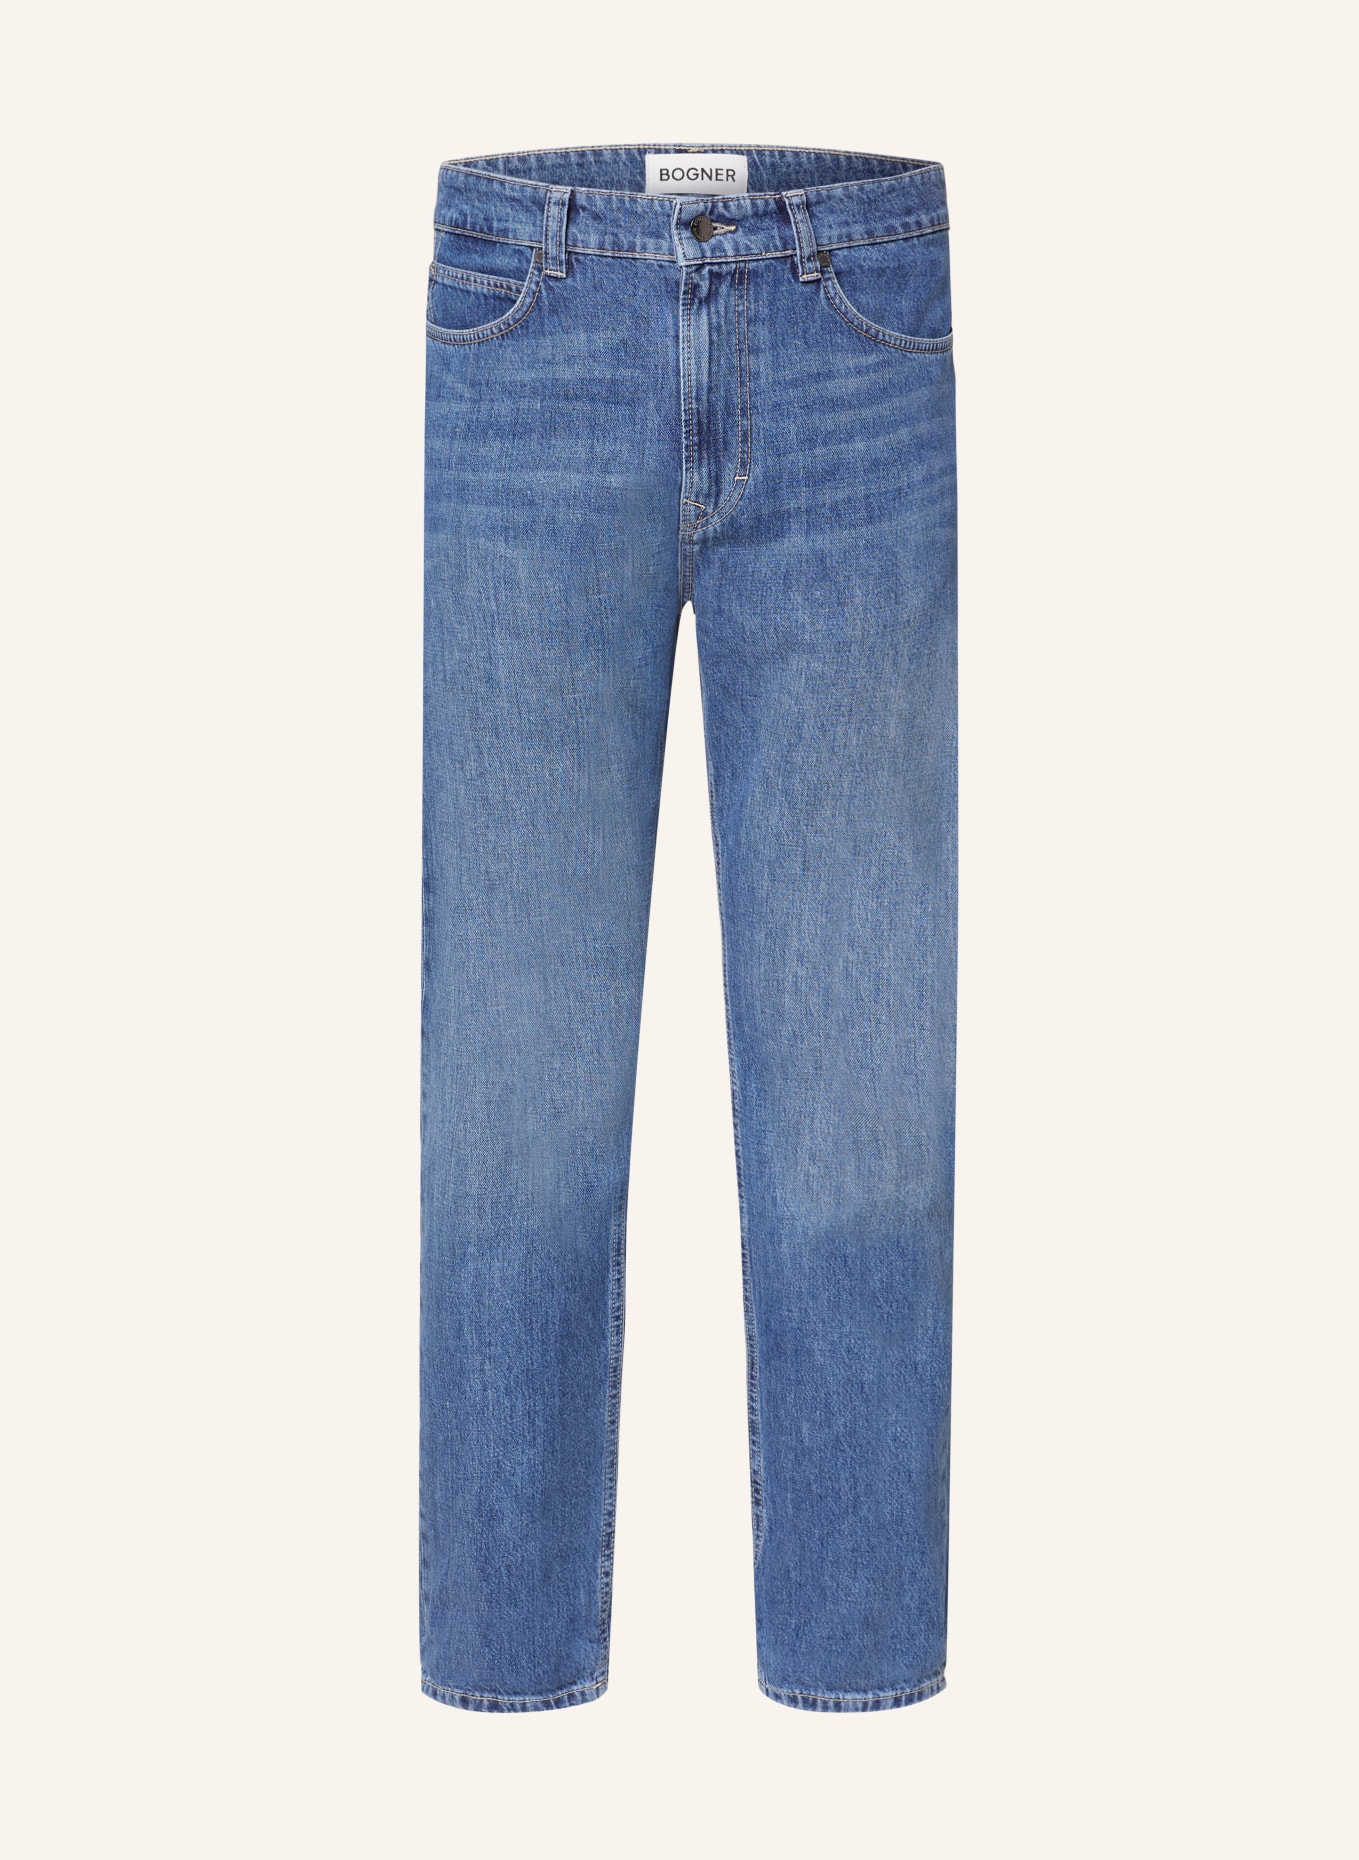 BOGNER Jeans BRIAN Tapered Fit, Farbe: 416 denim light (Bild 1)